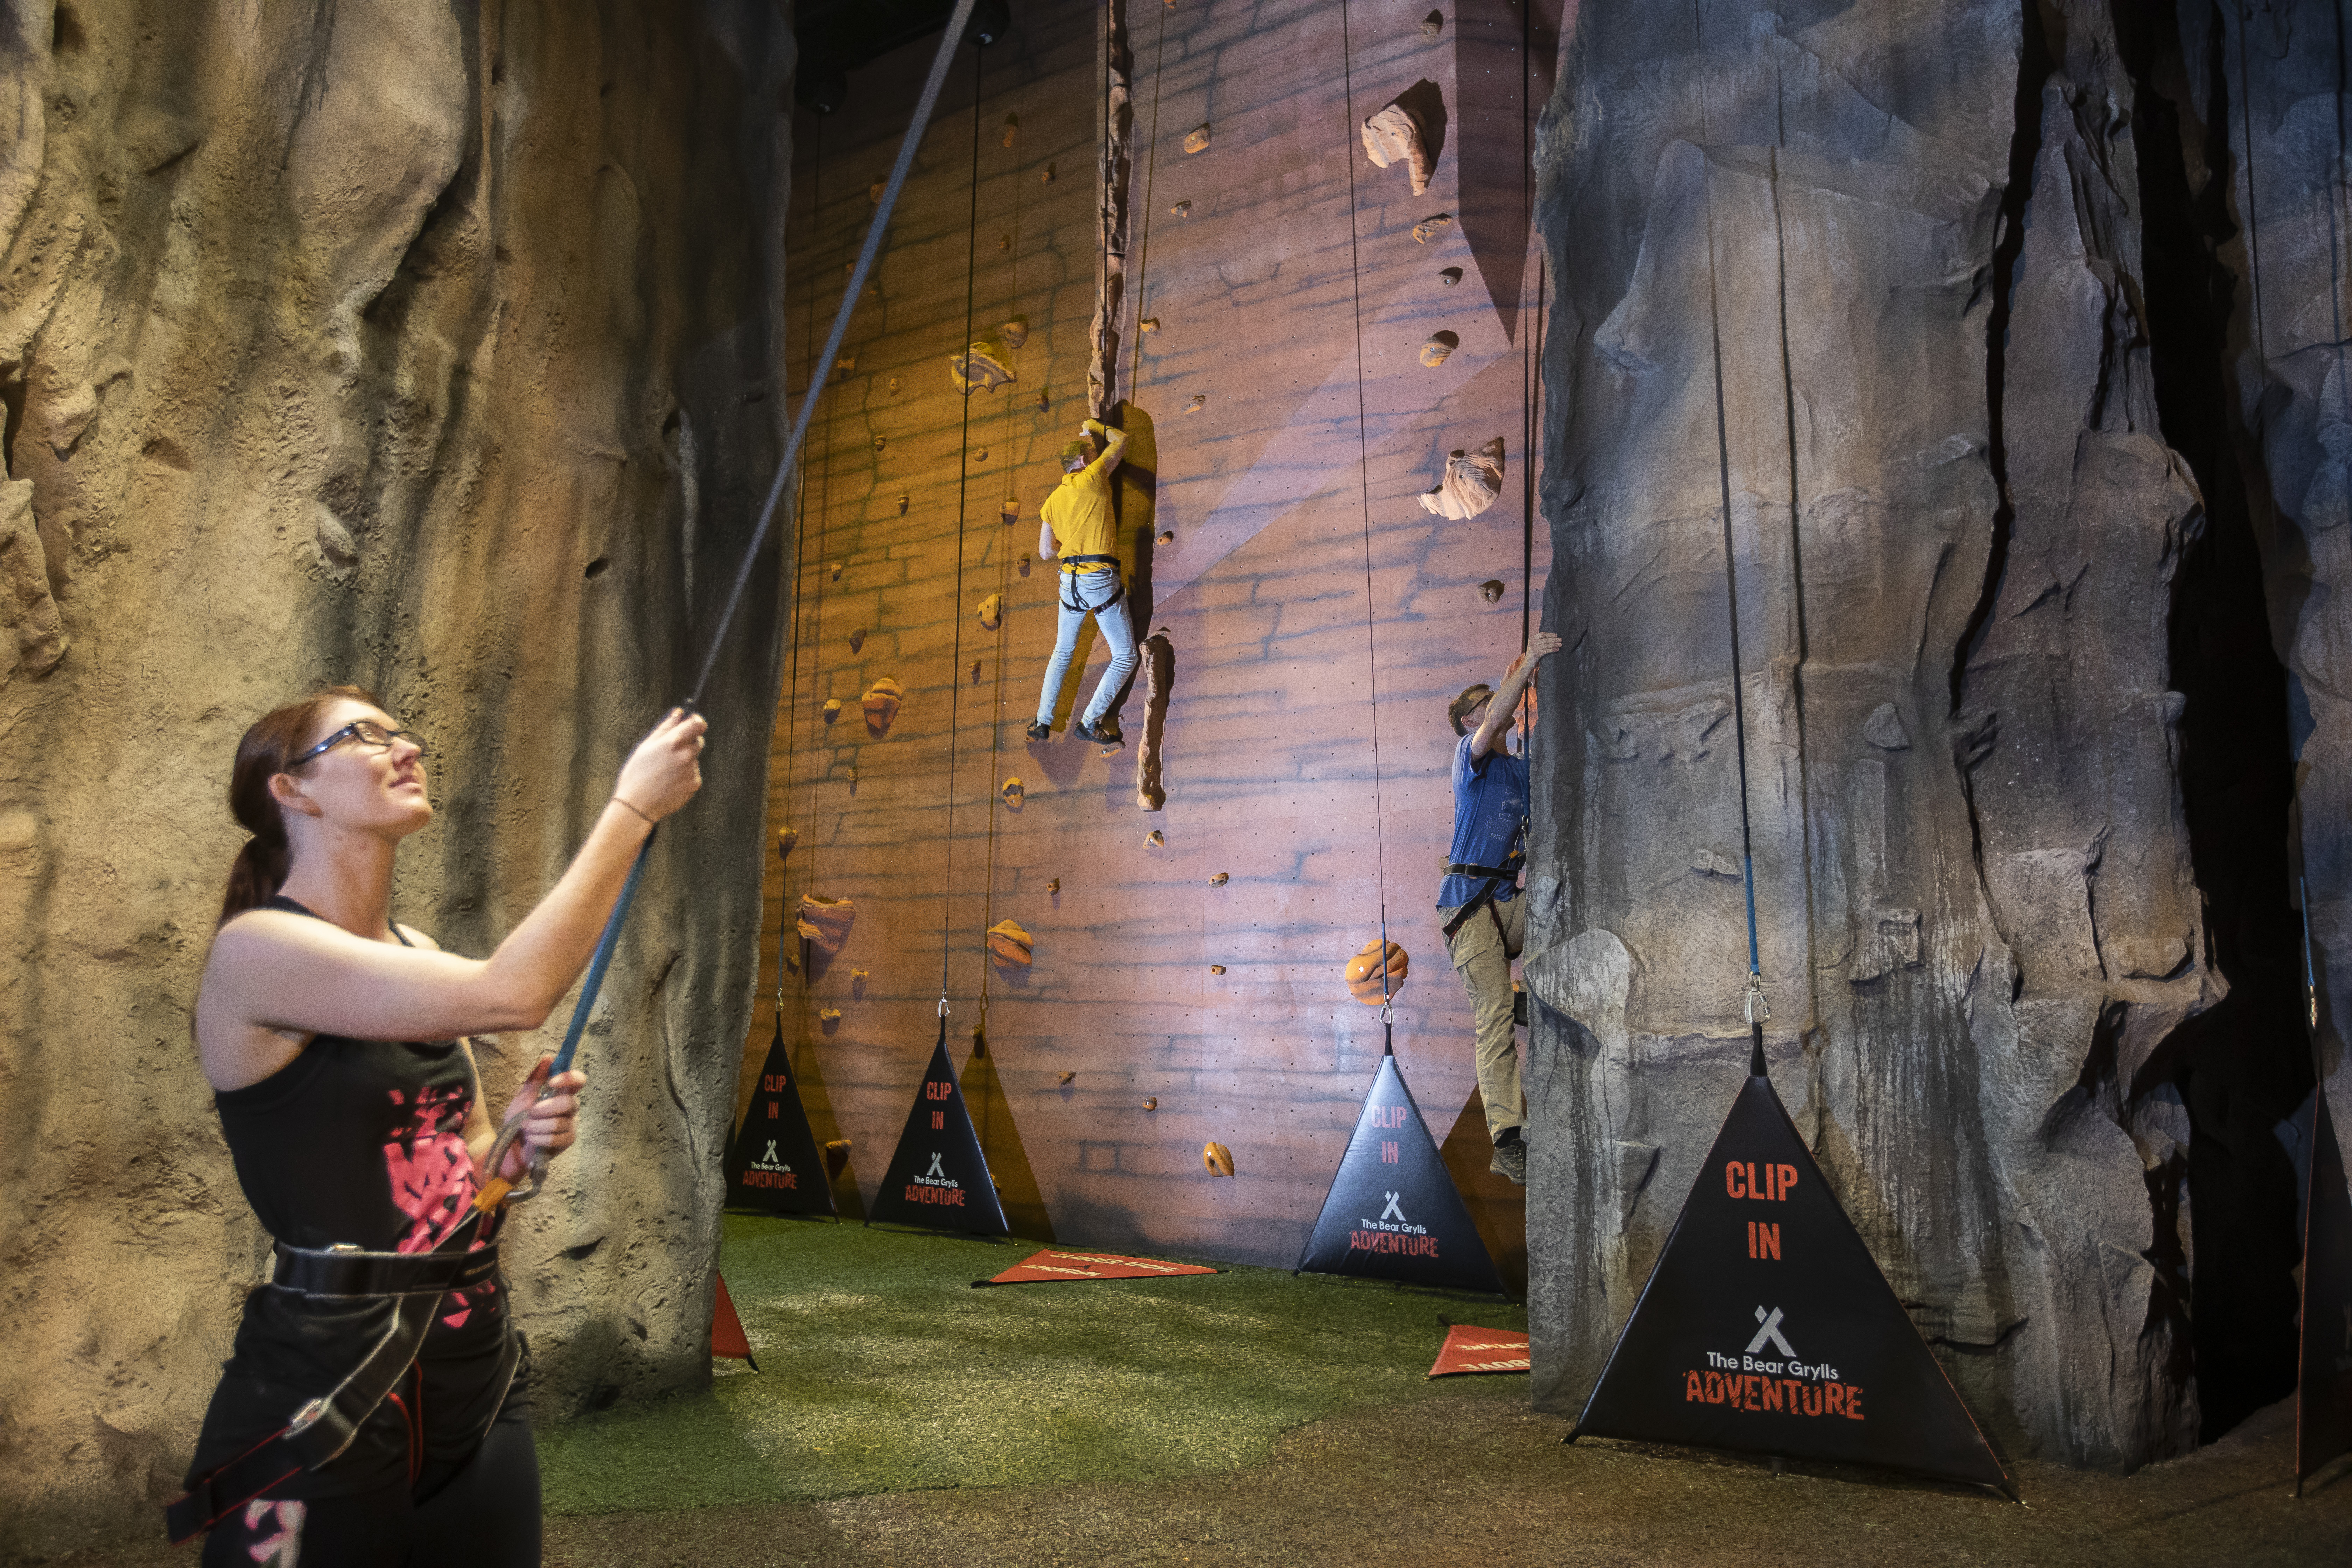 Rock Climbing Experience at Bear Grylls Adventure in Birmingham